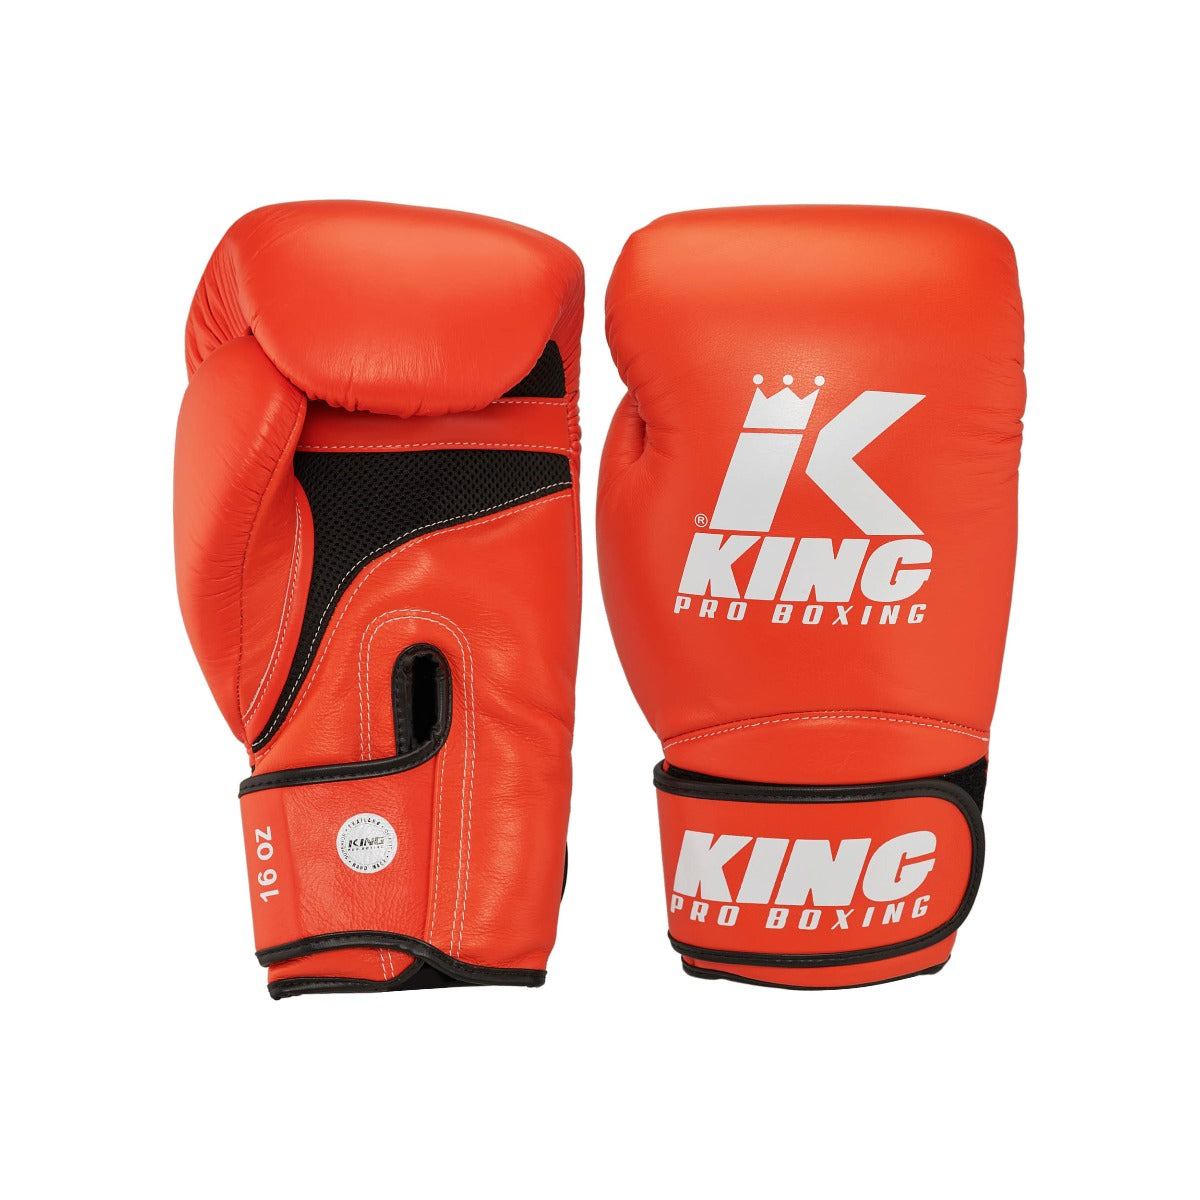 King PRO boxing boxing gloves - STAR MESH 6